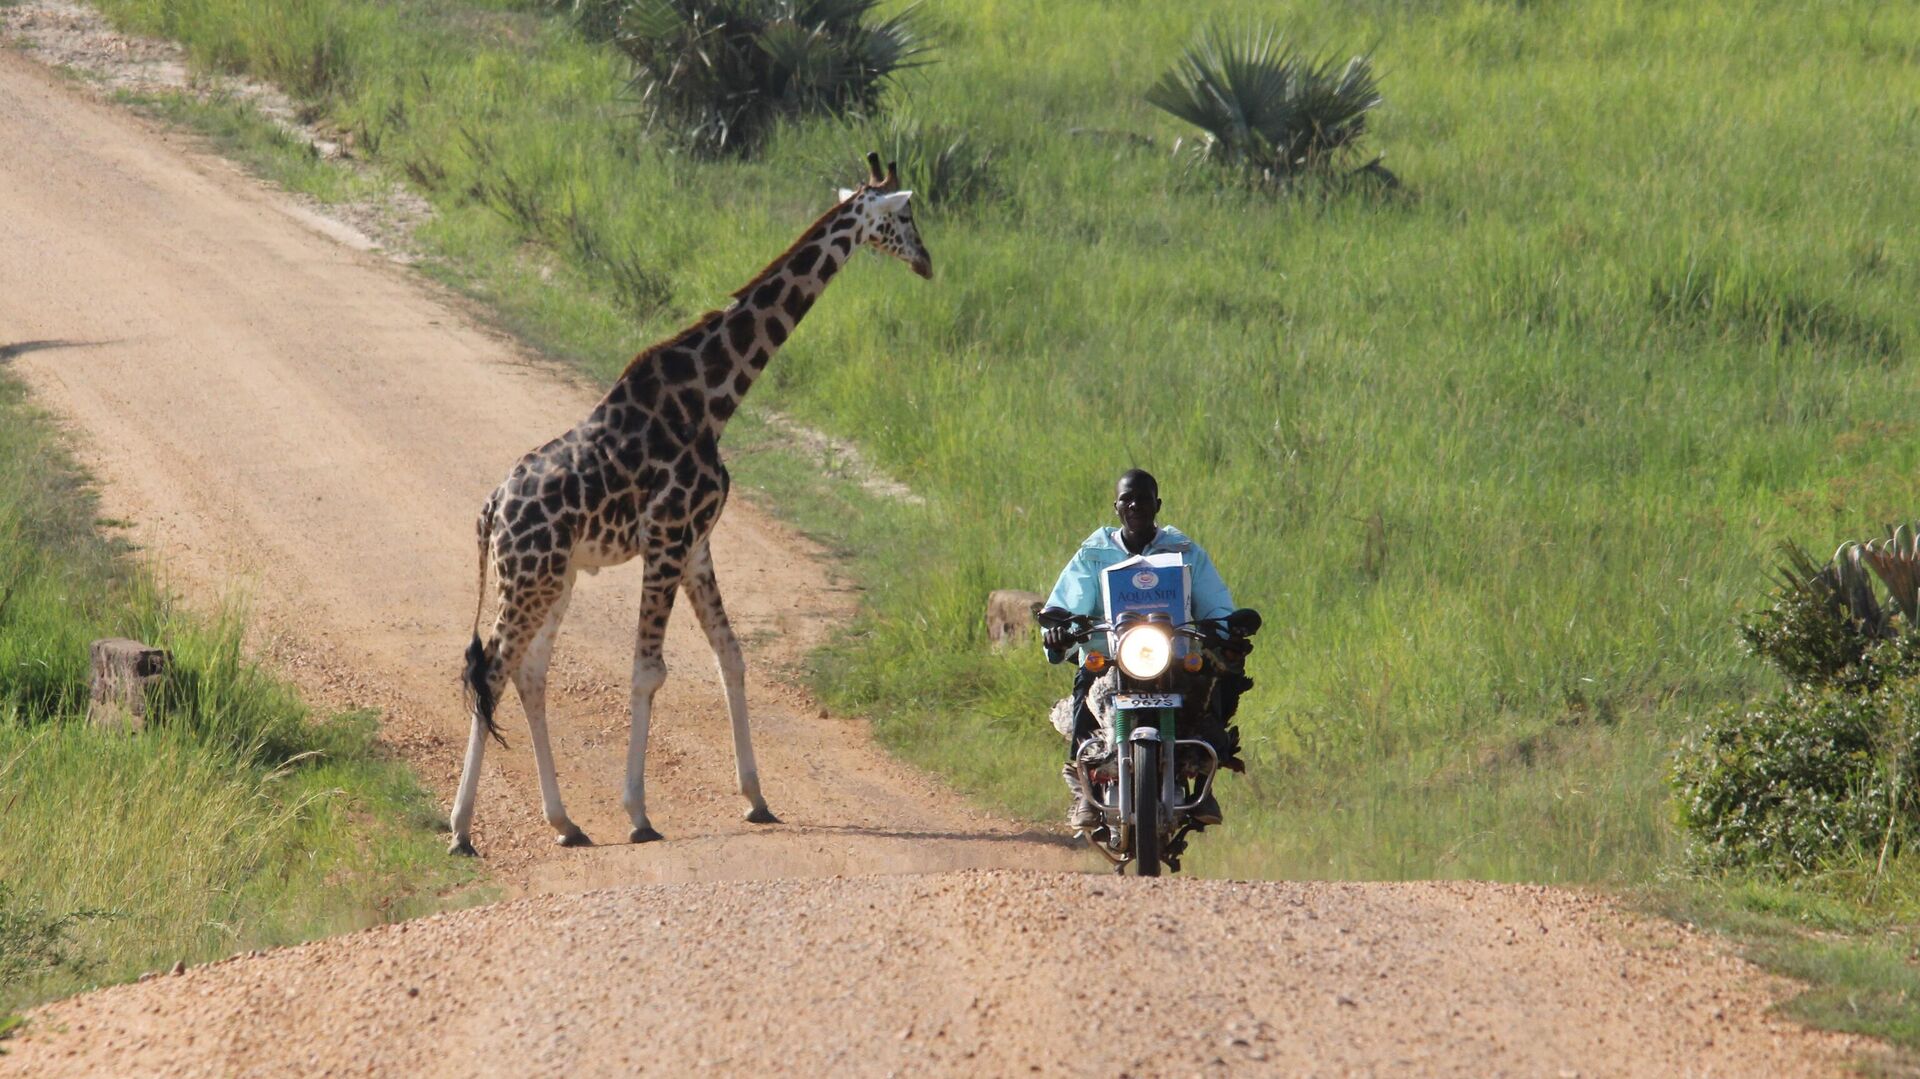 Мотоциклист проезжает мимо жирафа в Уганде - РИА Новости, 1920, 06.04.2021